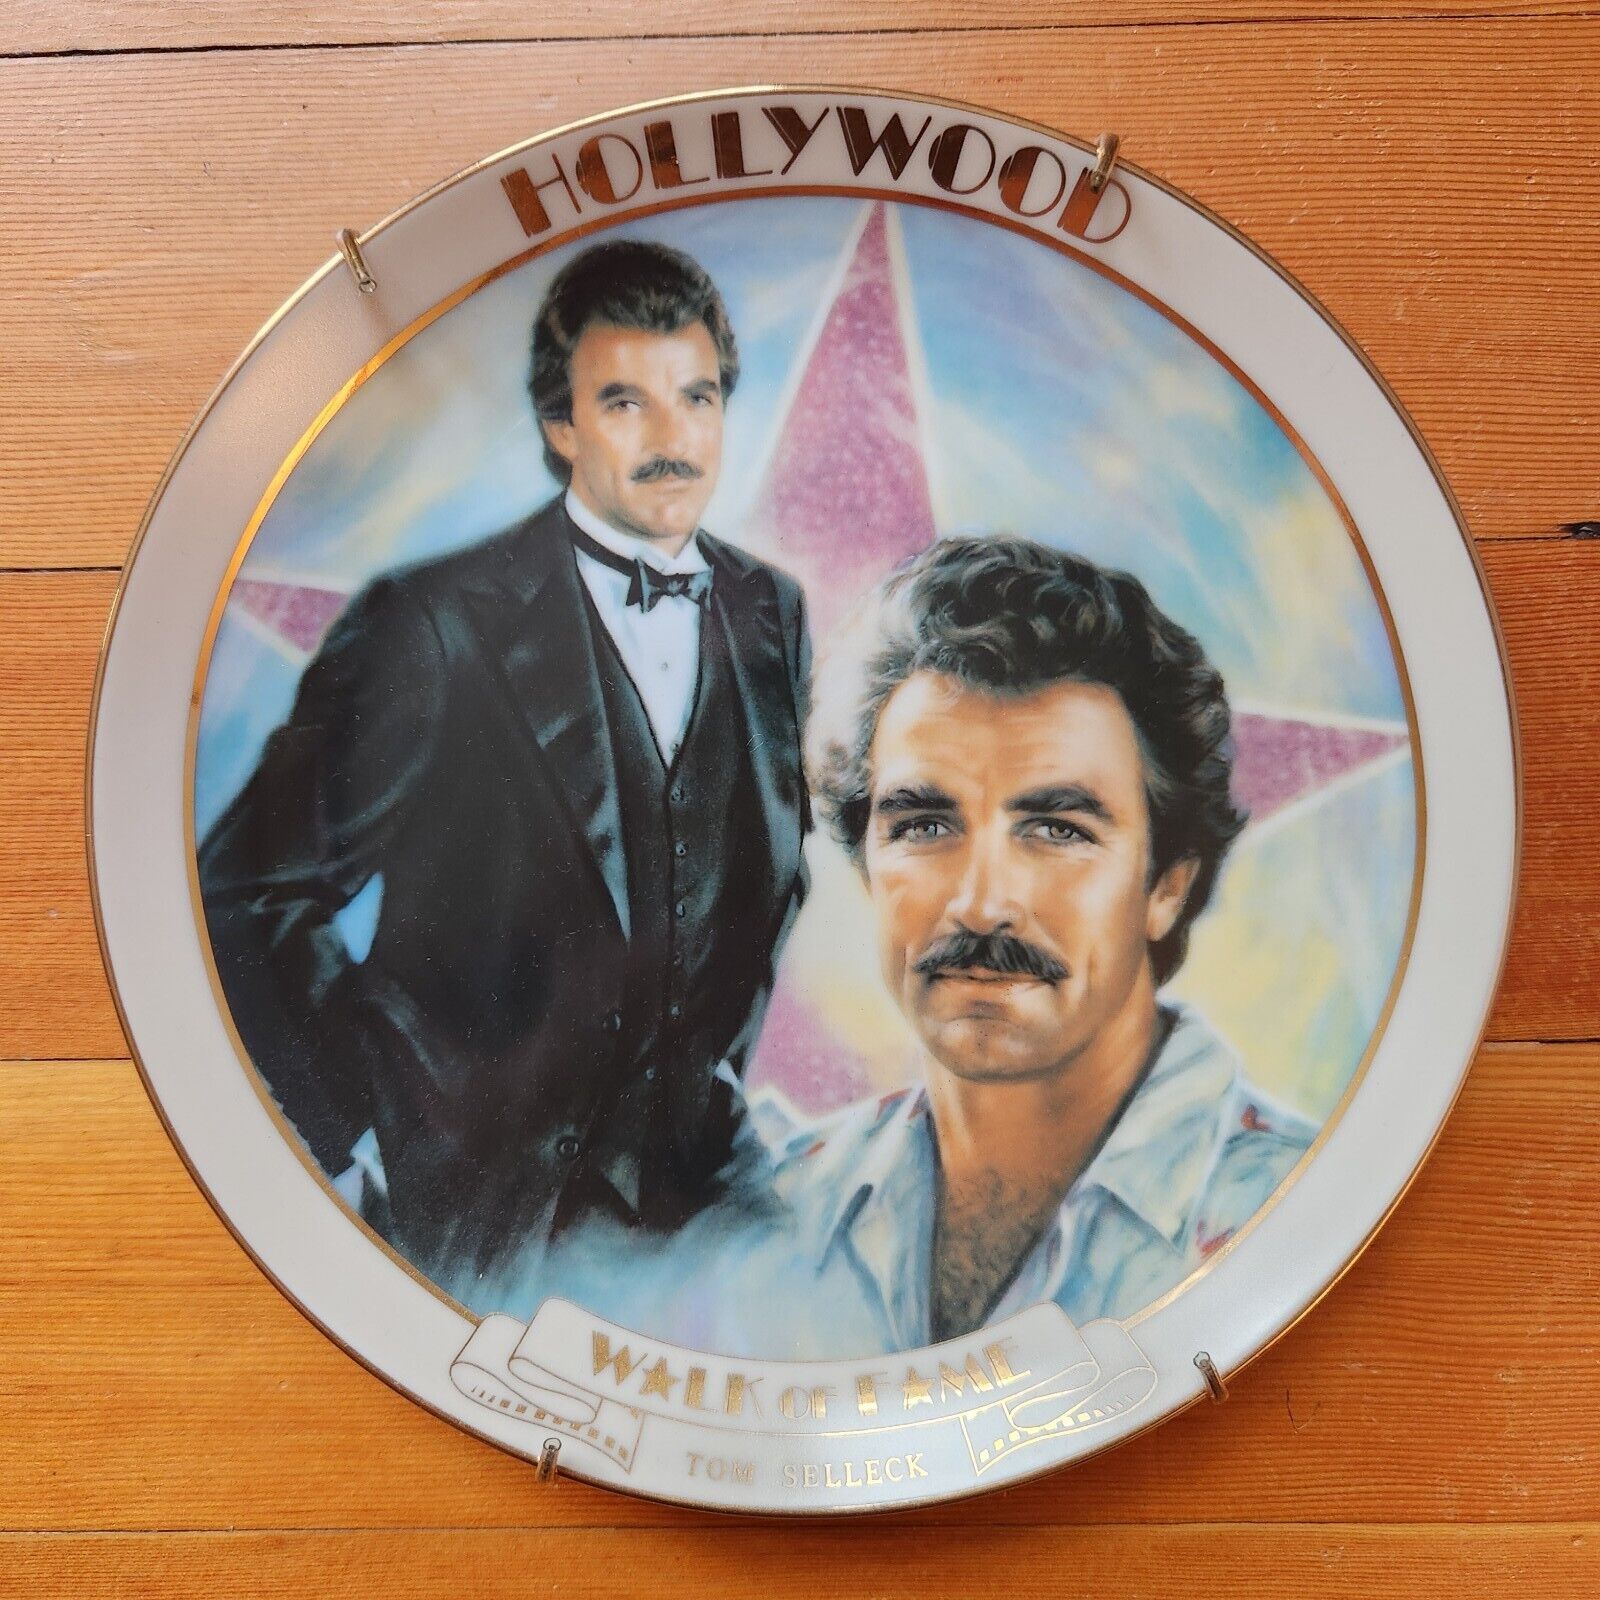 1989 Tom Selleck Magnum PI Hollywood Walk of Fame Danbury Mint Plate 8 Inch